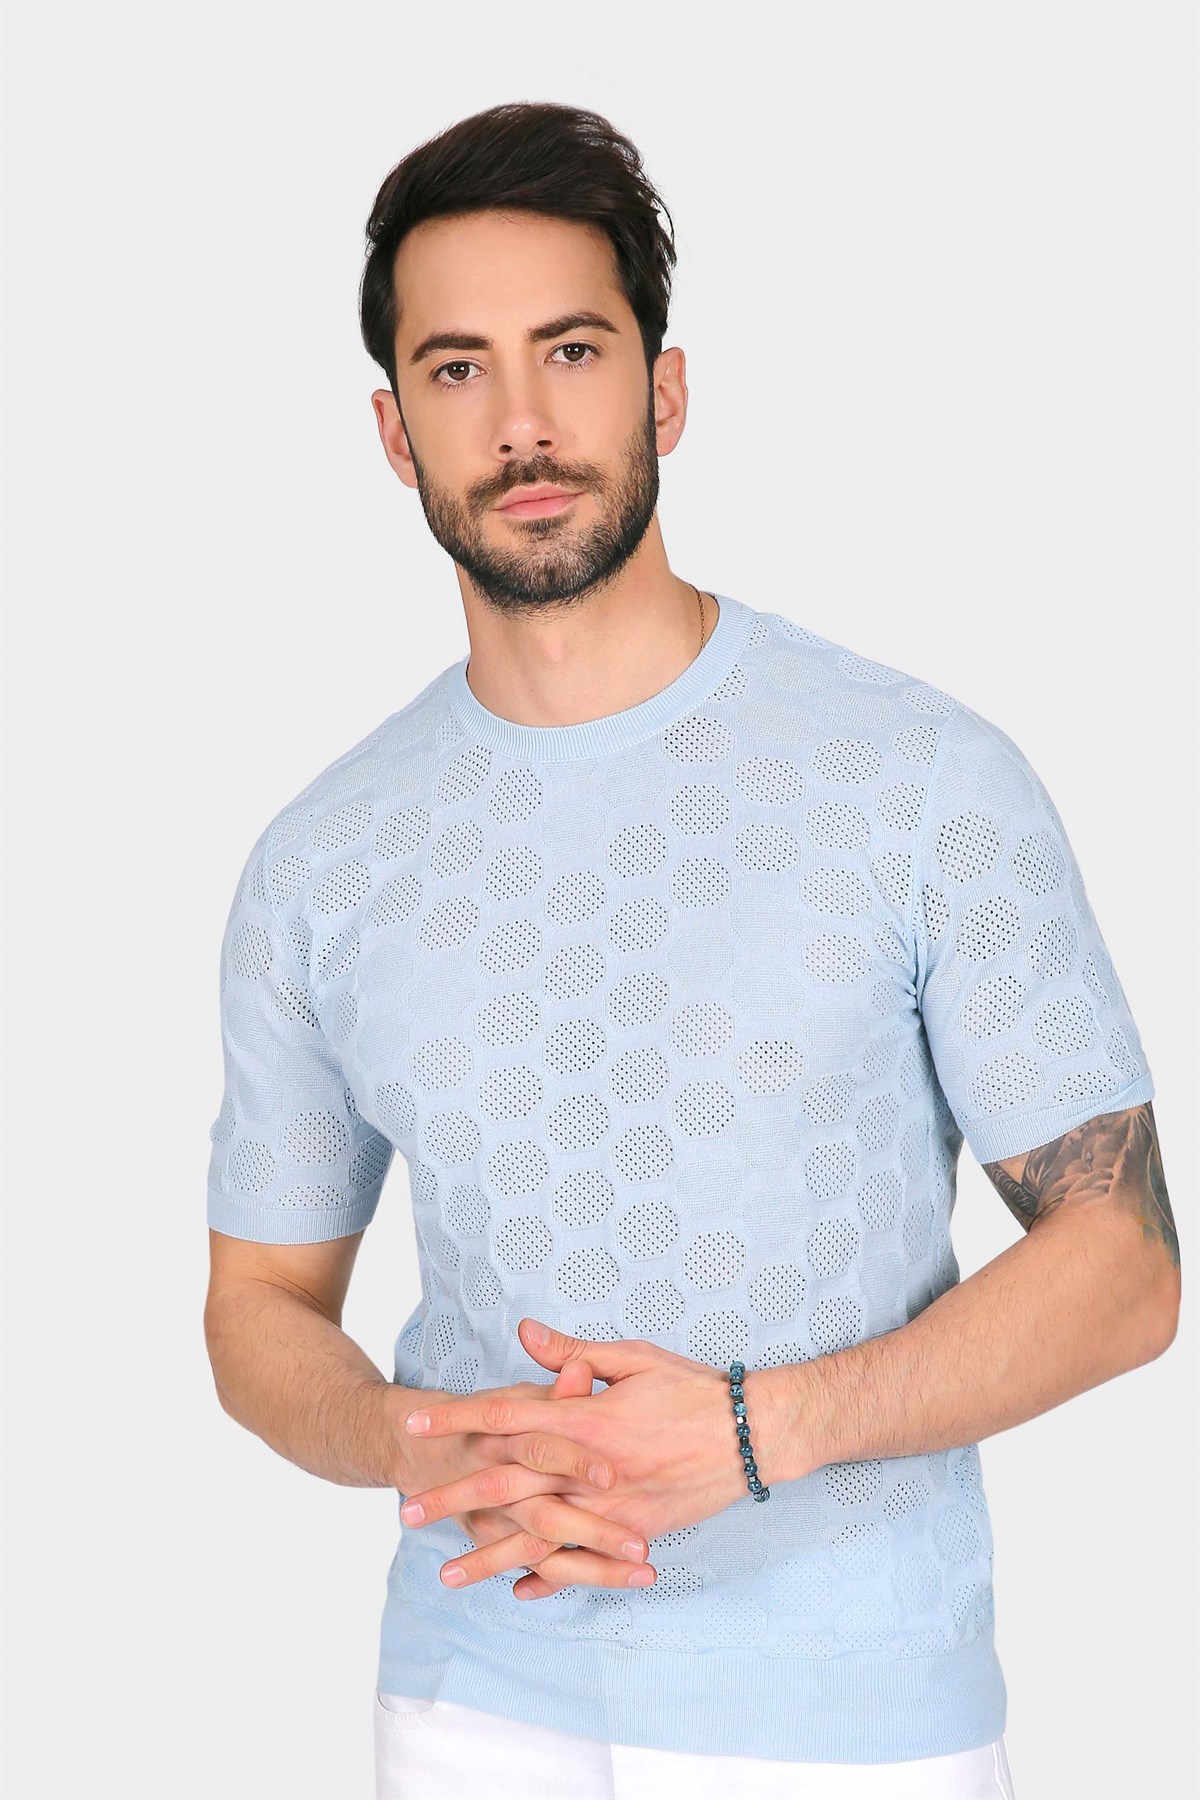 Ferraro Erkek Petek Desenli Bisiklet Yaka Triko T Shirt - Mavi